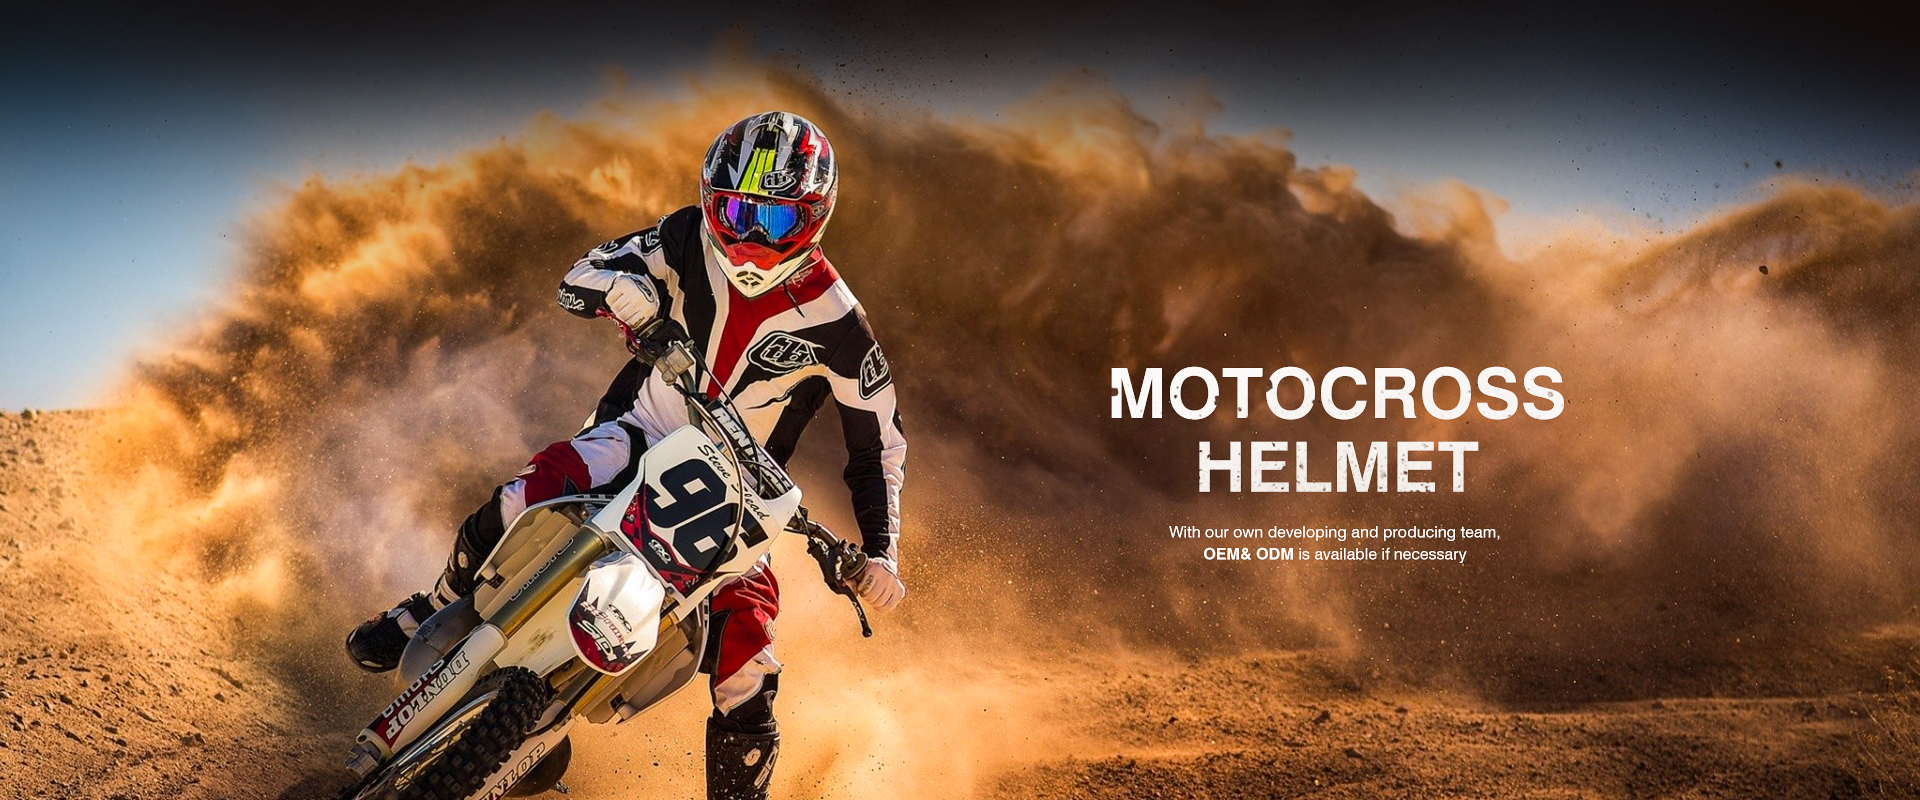 Motocross Helmet, Racing Helmet, Dirt Bike Riding Helmets - KangXing